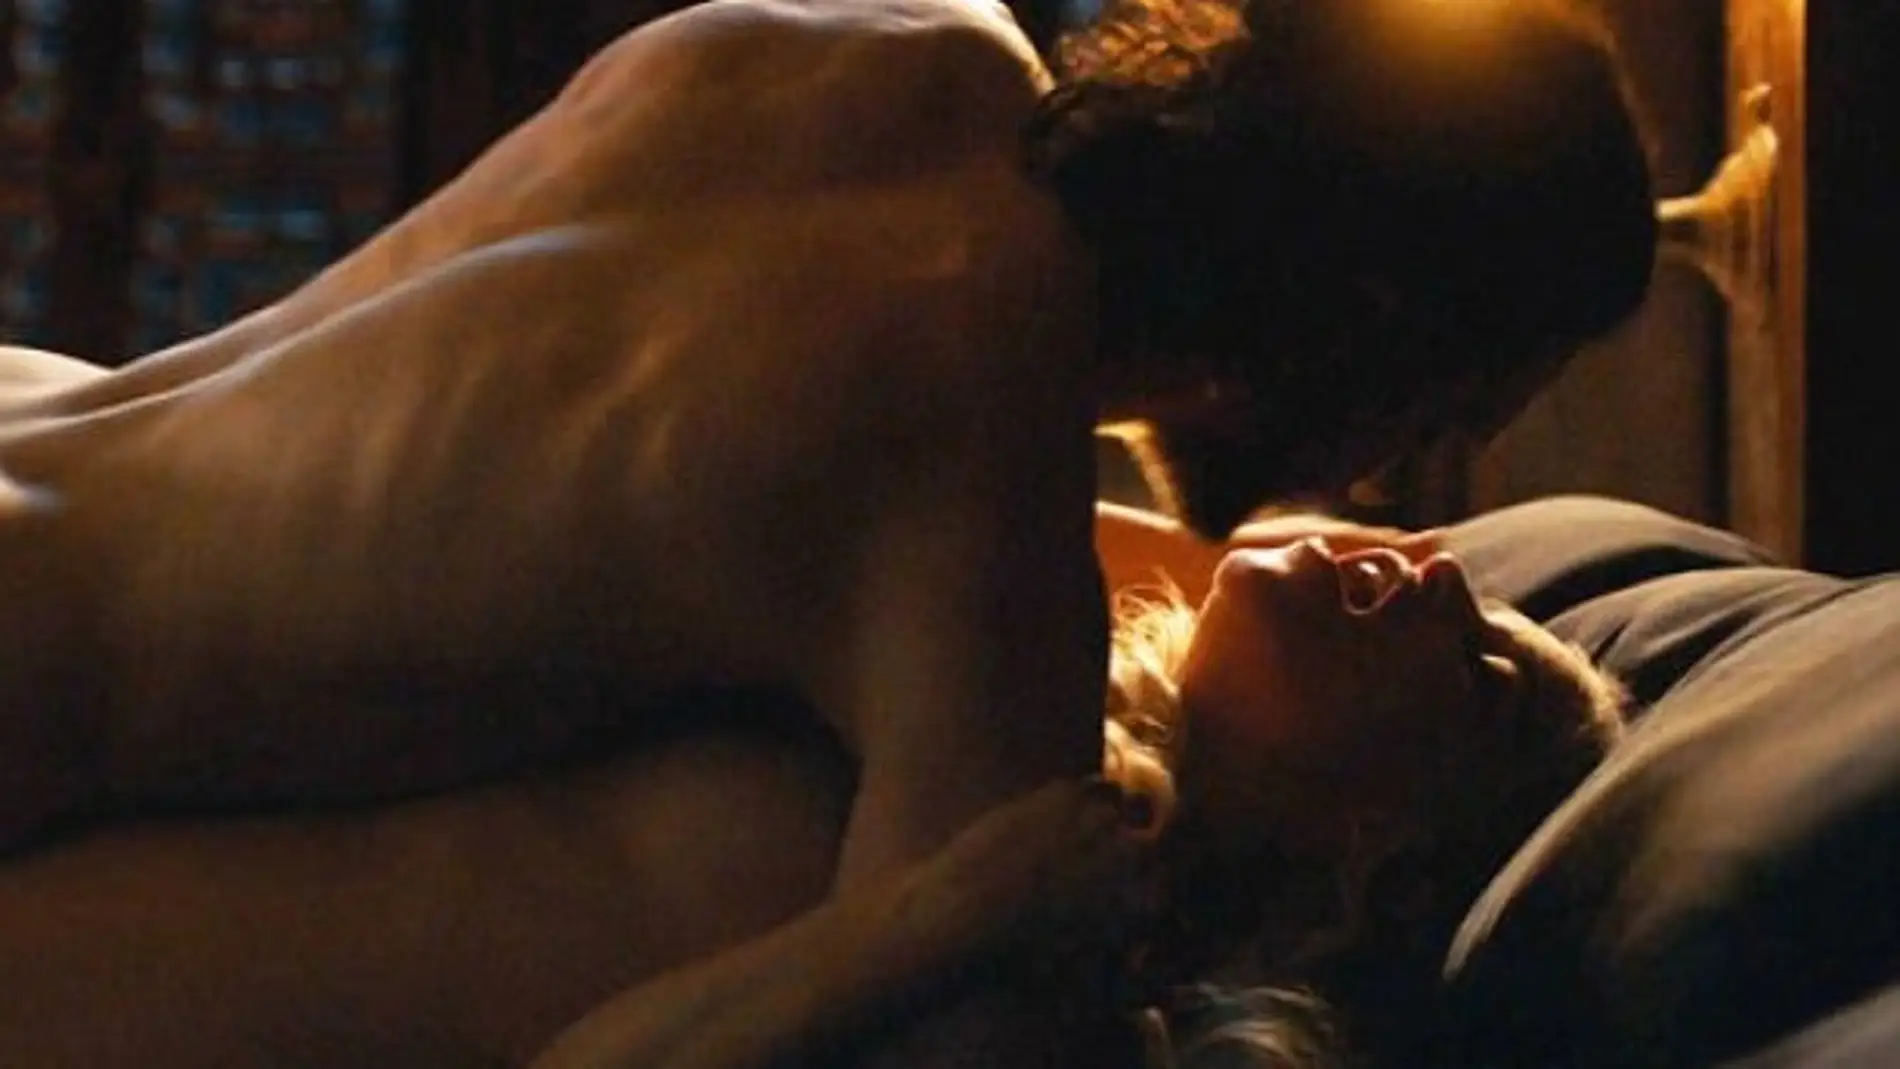 Jon Snow y Daenerys Targaryen en LA escena de 'Juego de Tronos'